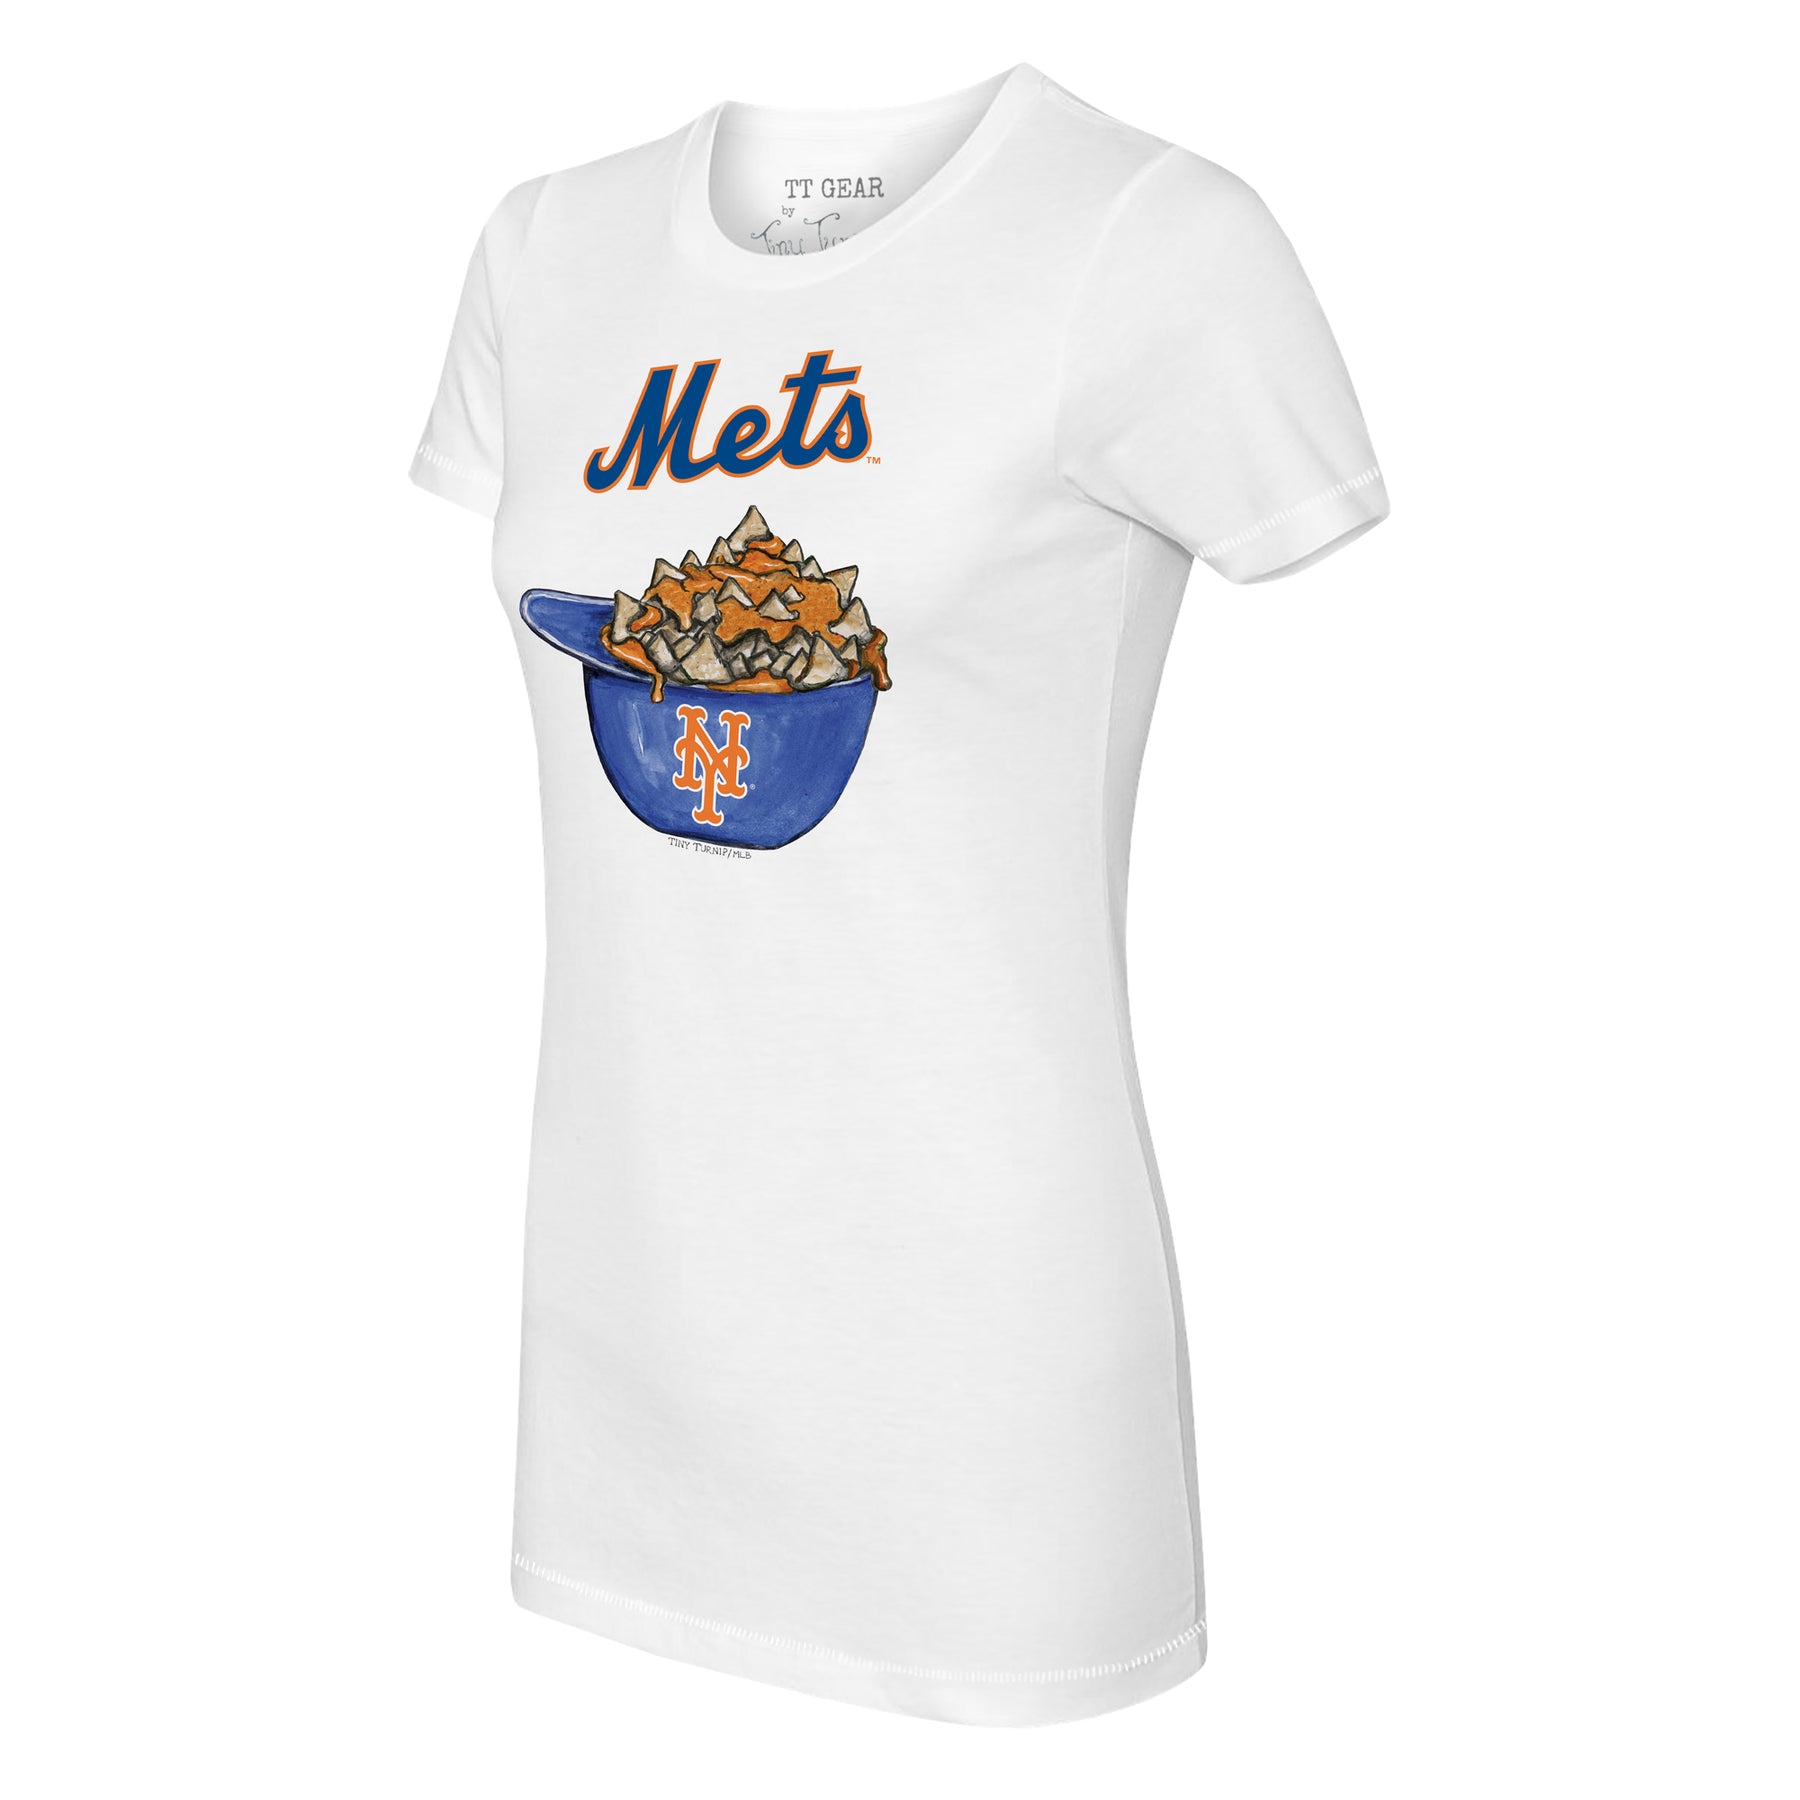 New York Mets Nacho Helmet Tee Shirt